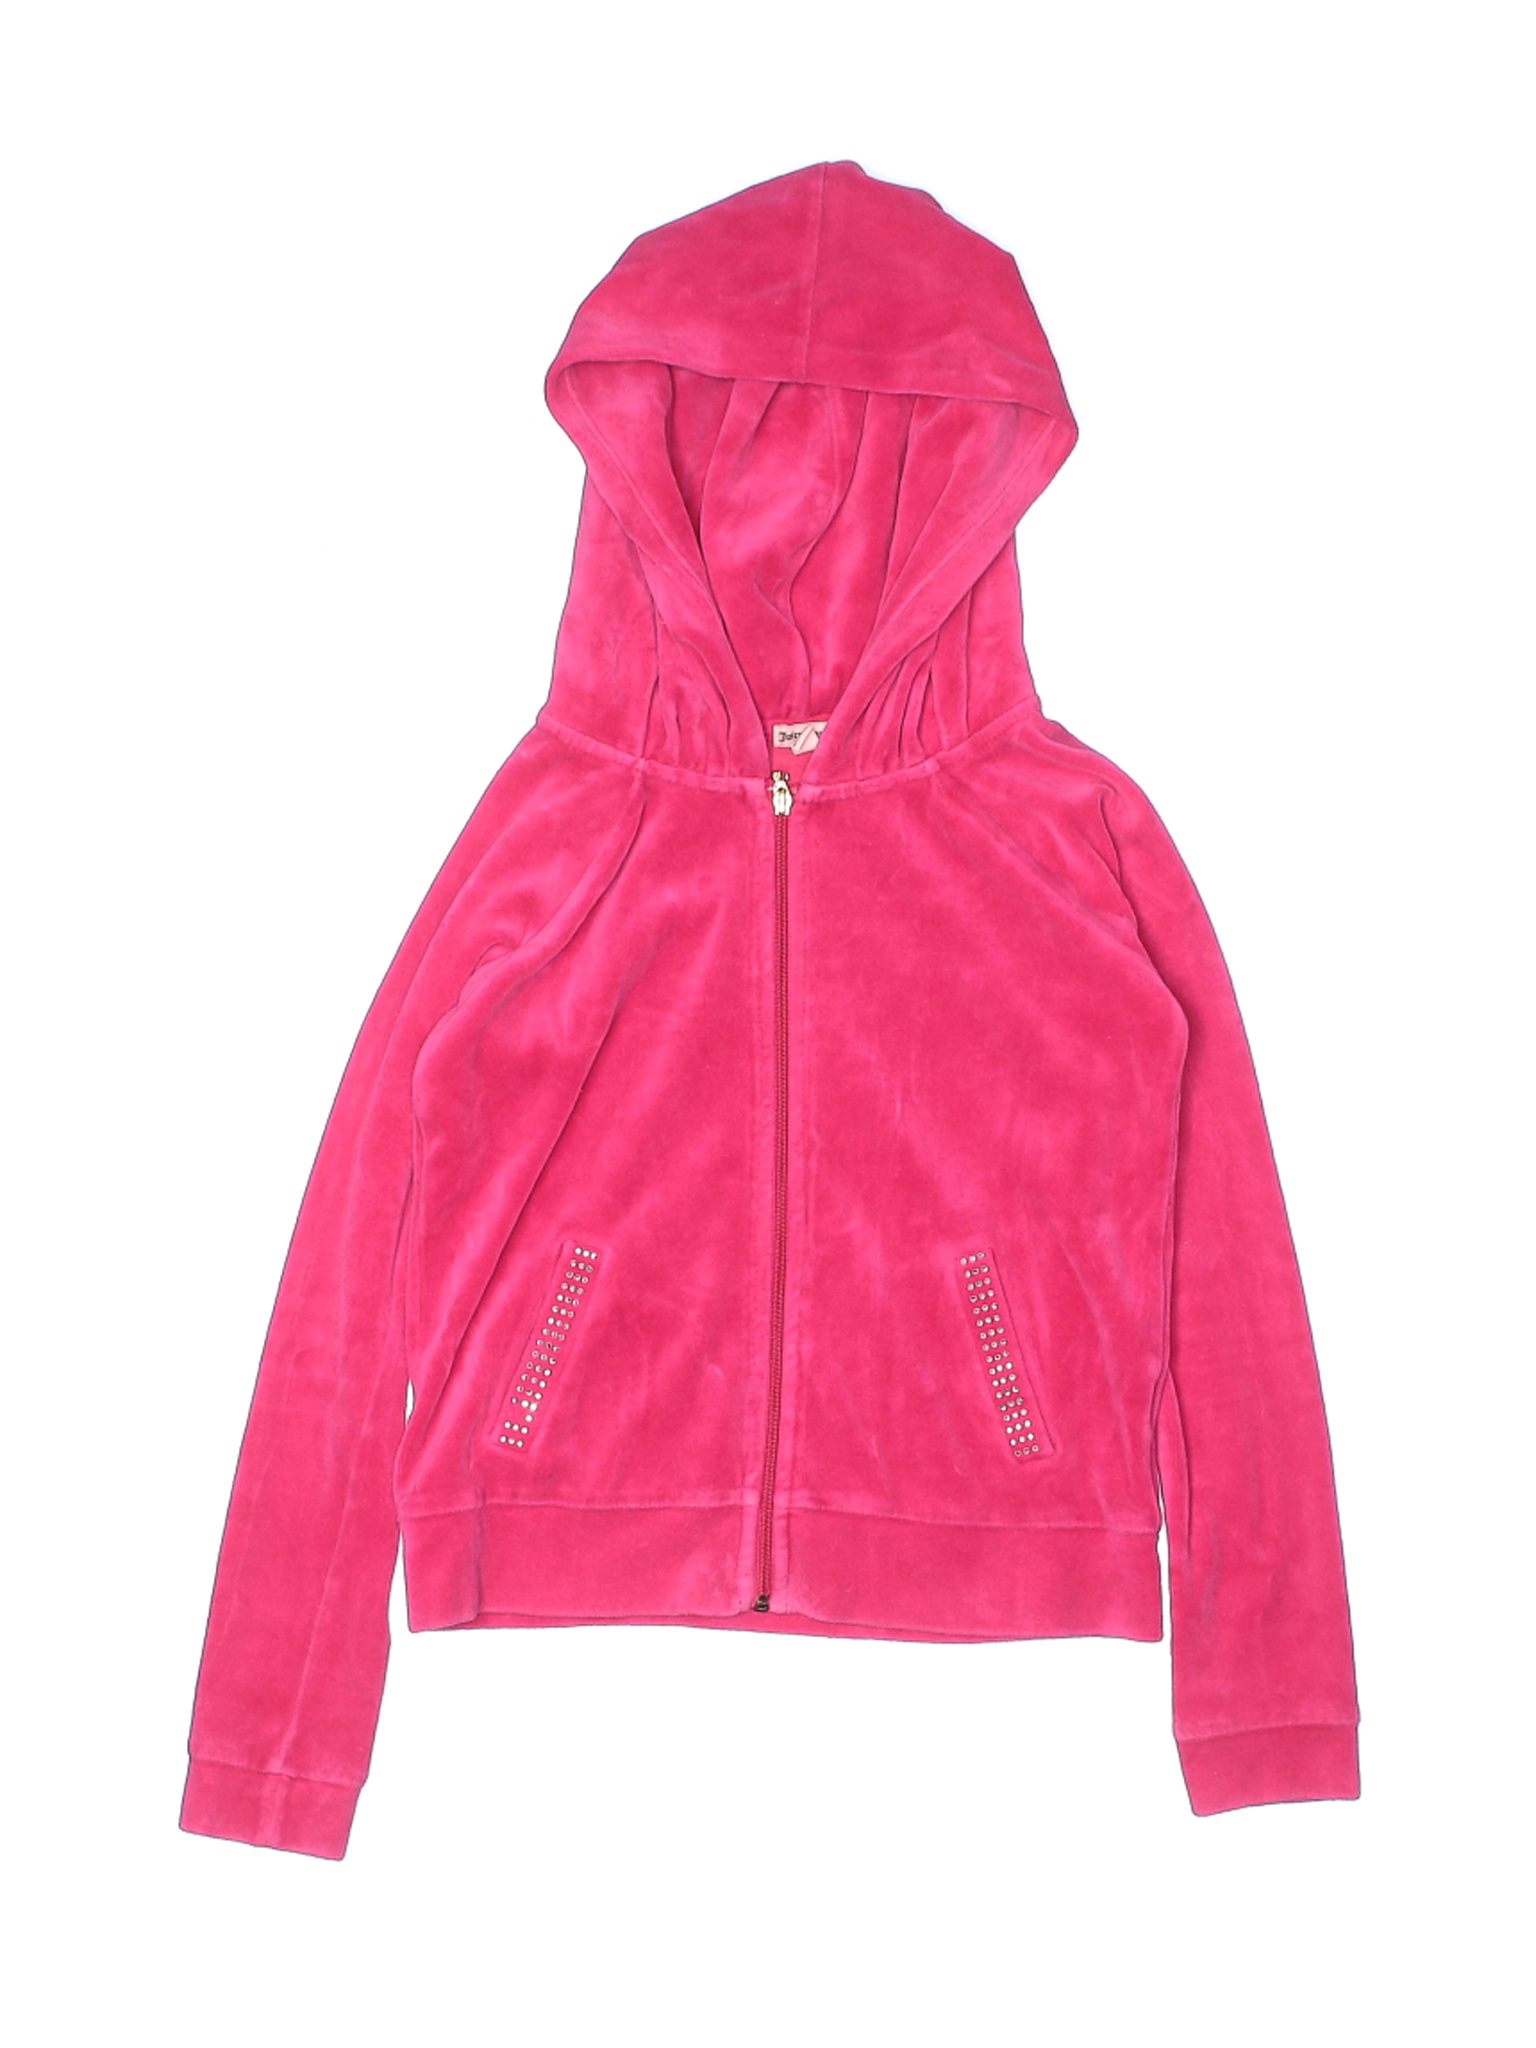 Juicy Couture Girls Pink Zip Up Hoodie X-Small kids | eBay